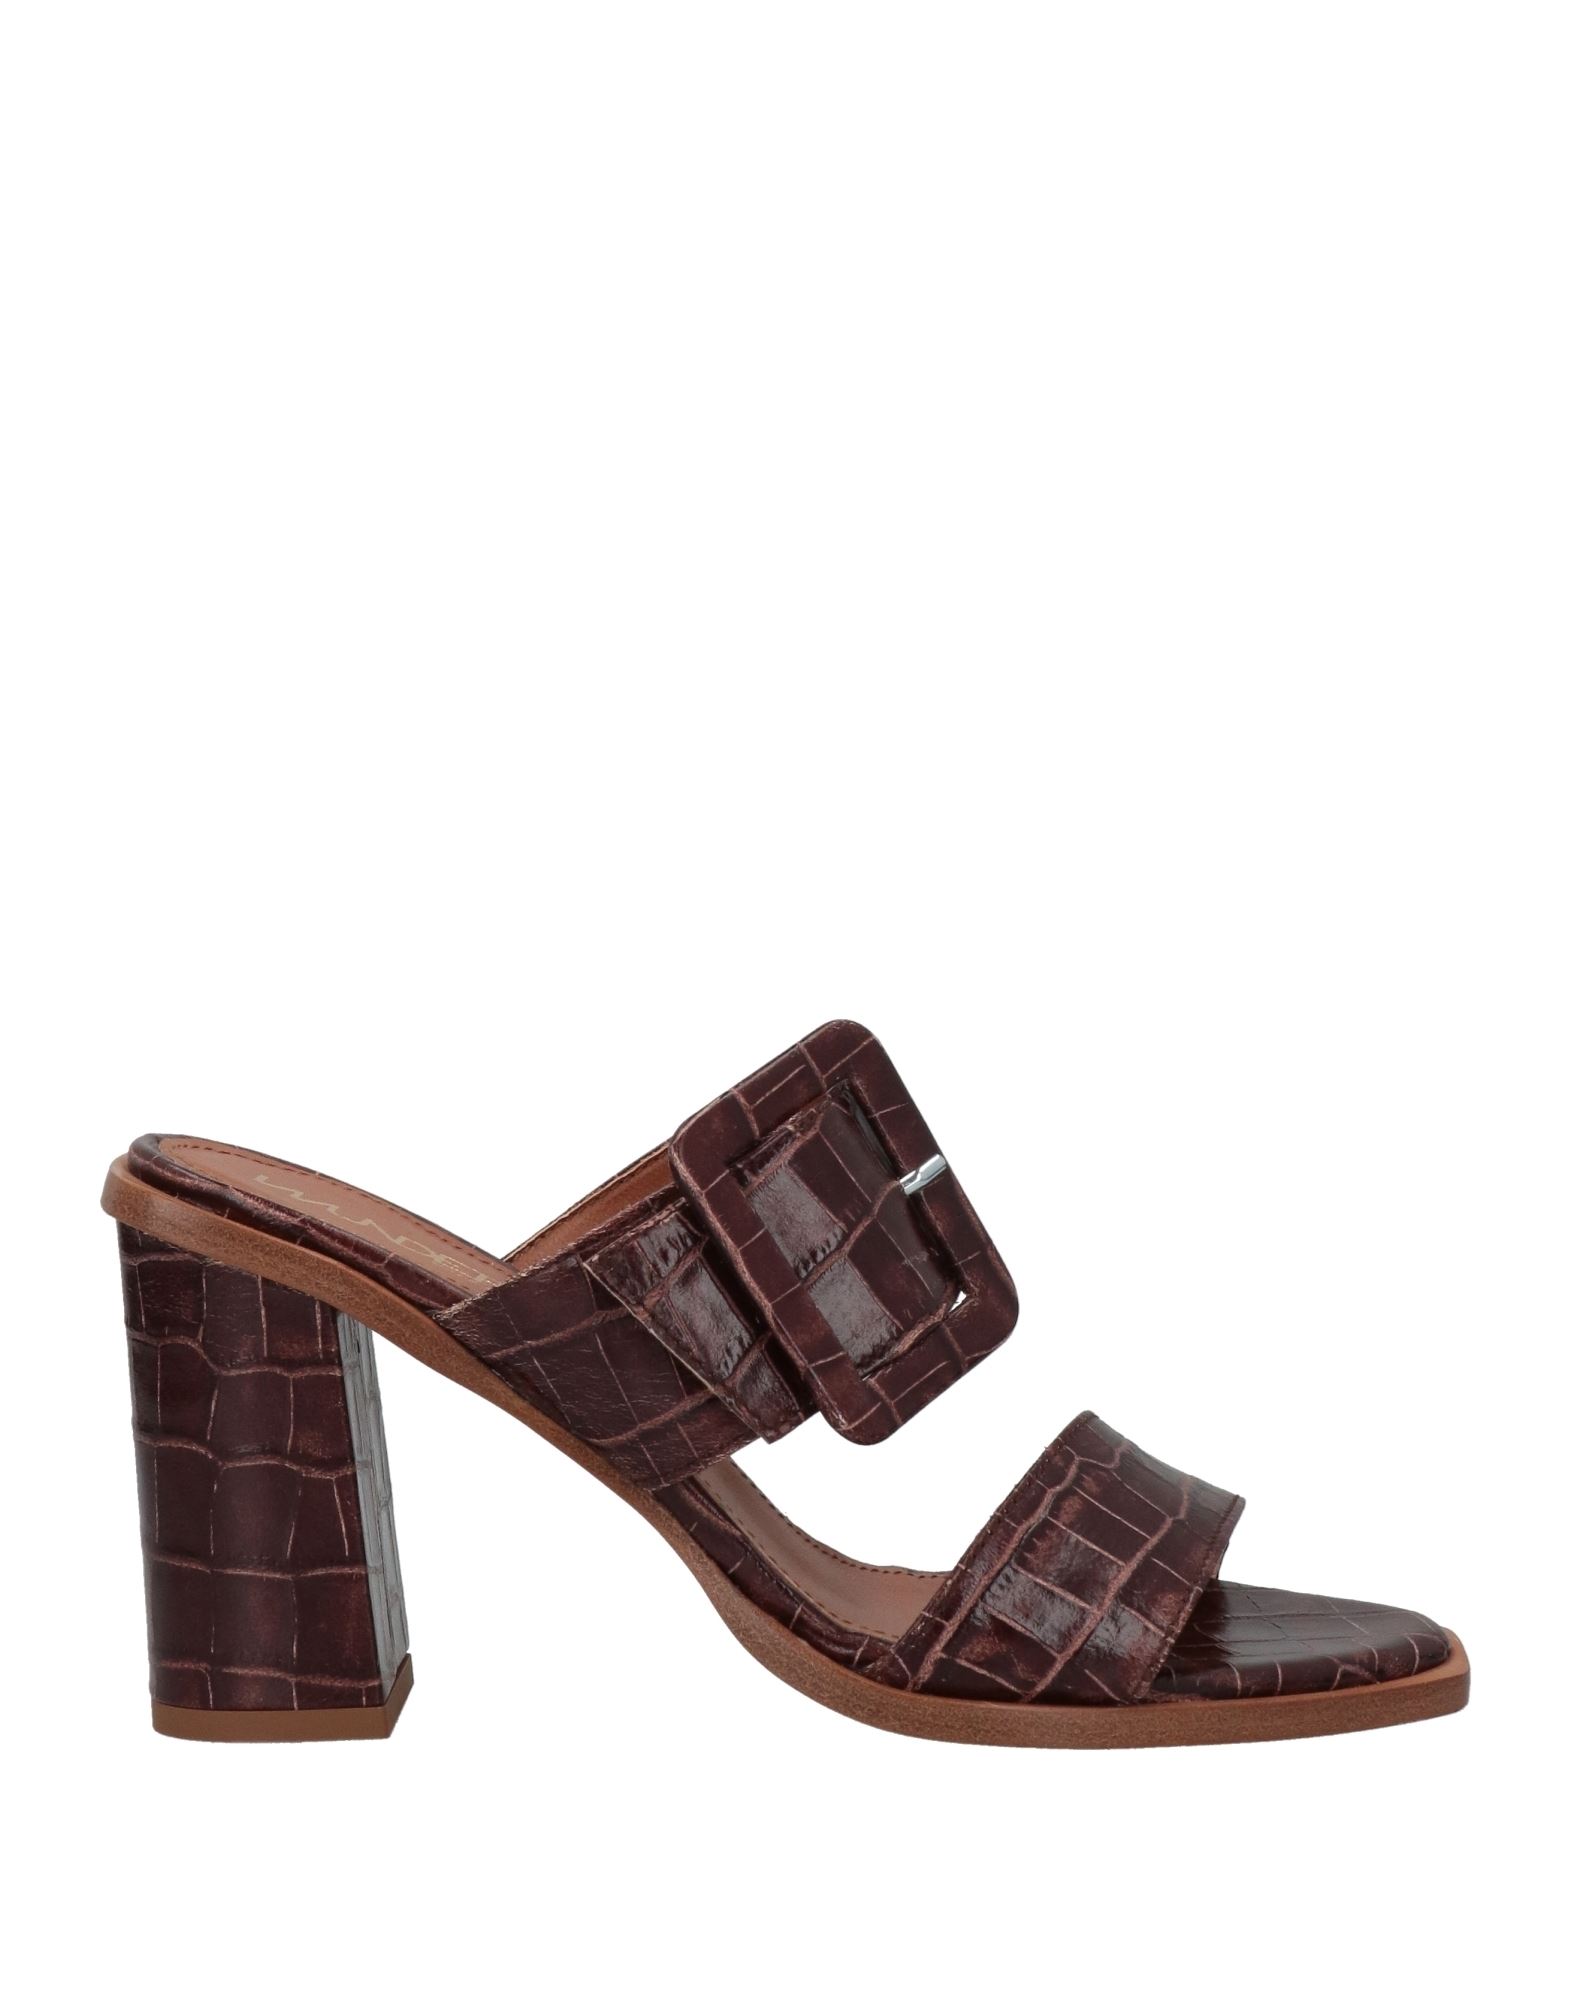 Wunderl Sandals In Brown